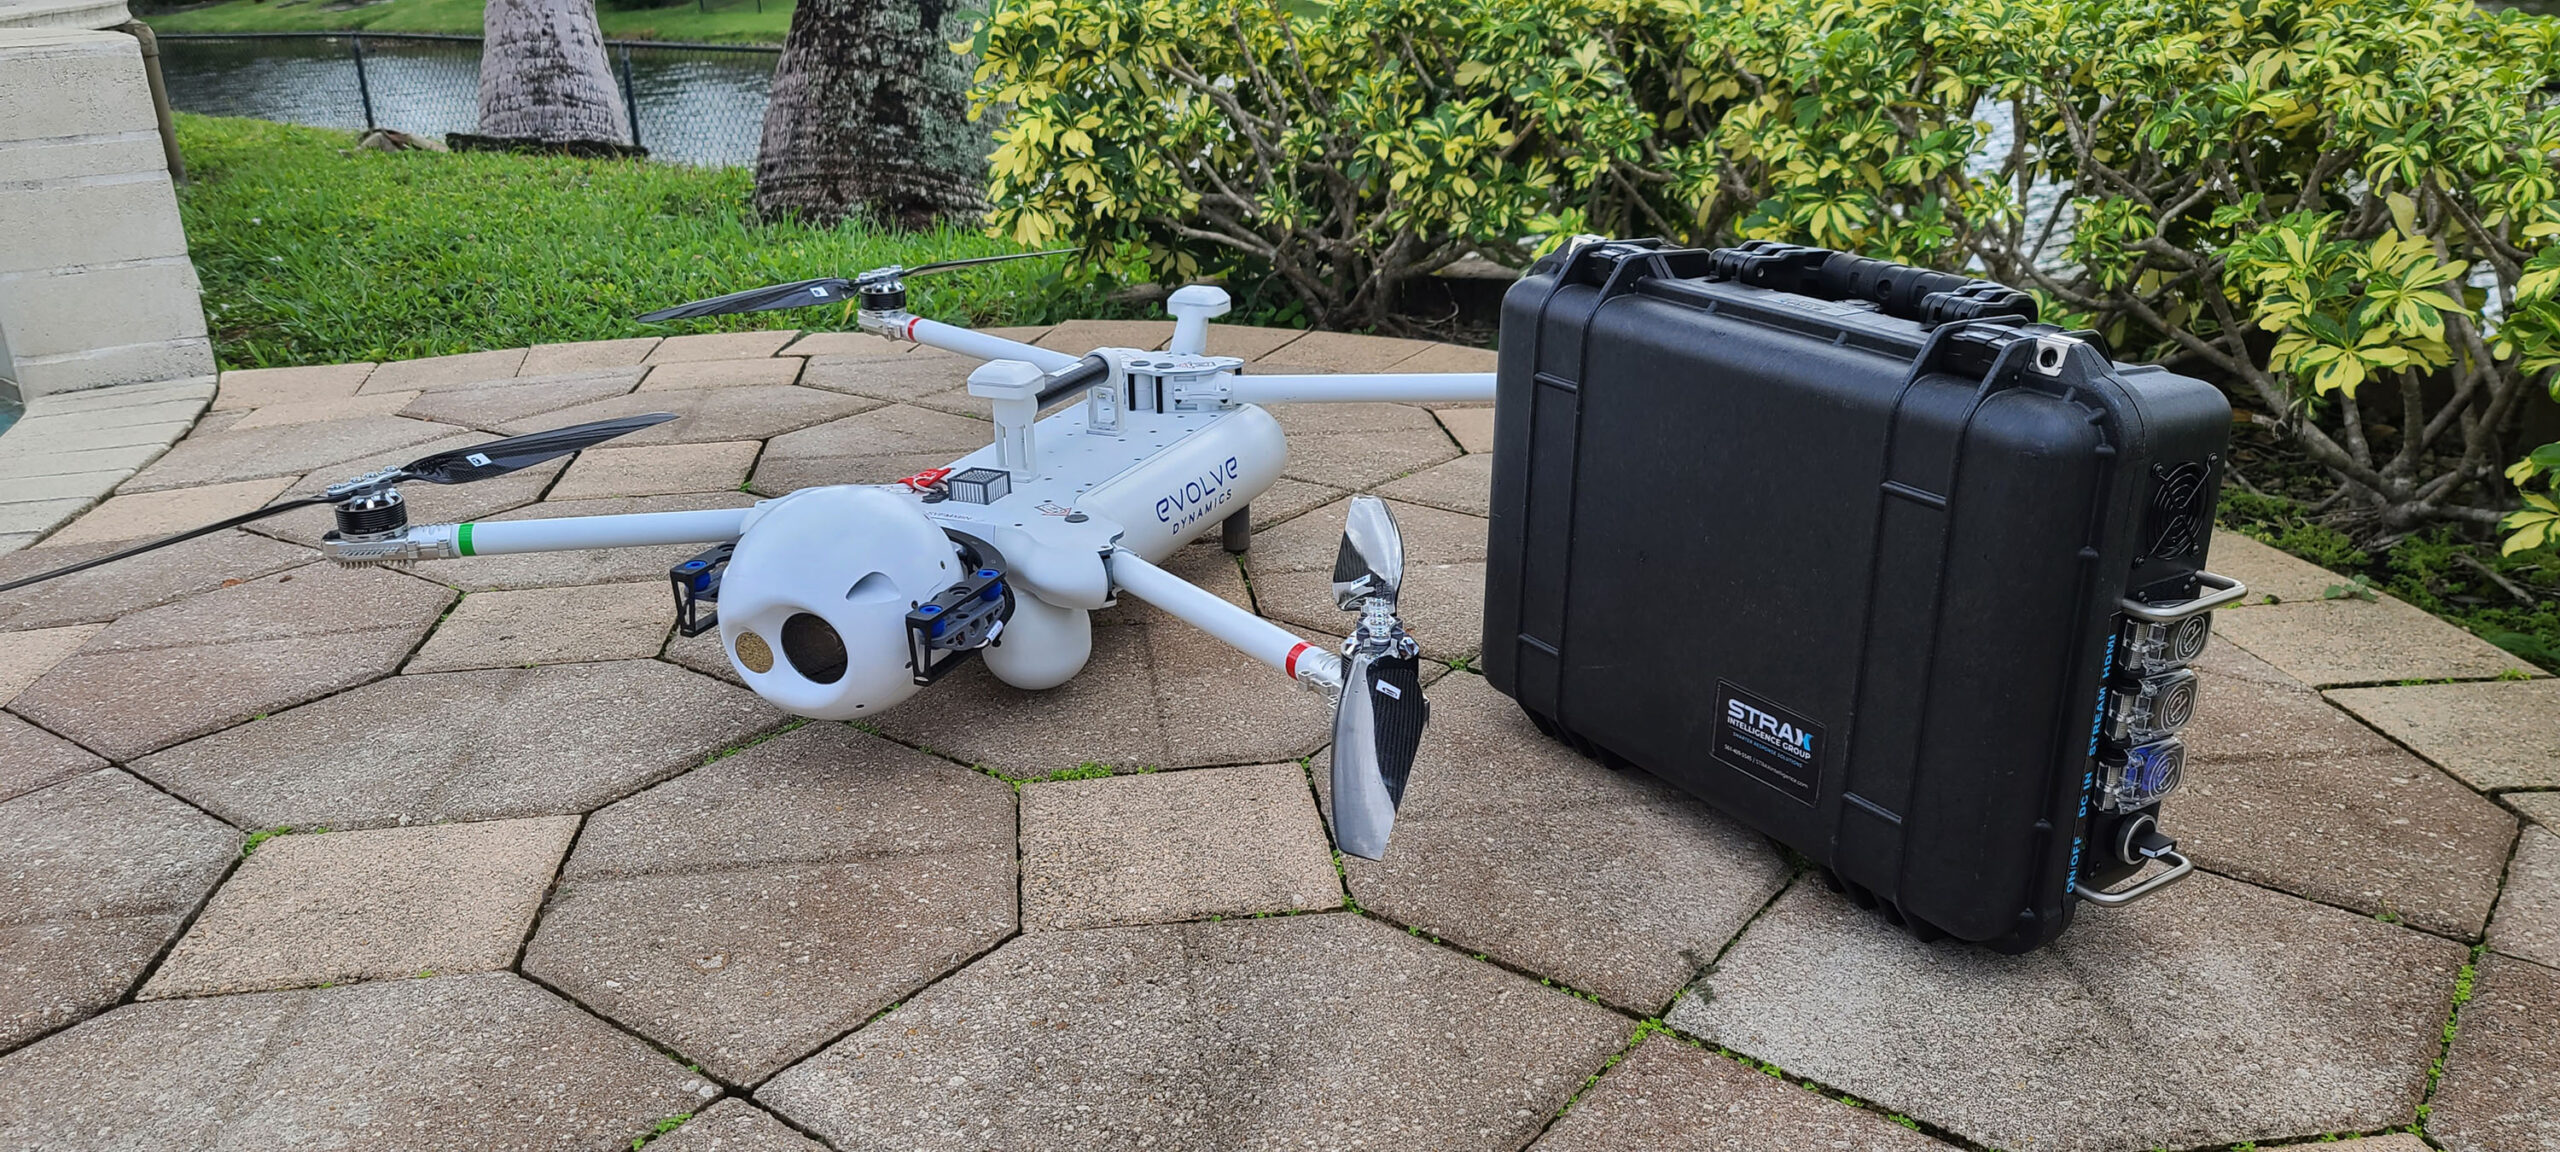 STRAX Platform completes integration with Sky Mantis UAV from Evolve Dynamics